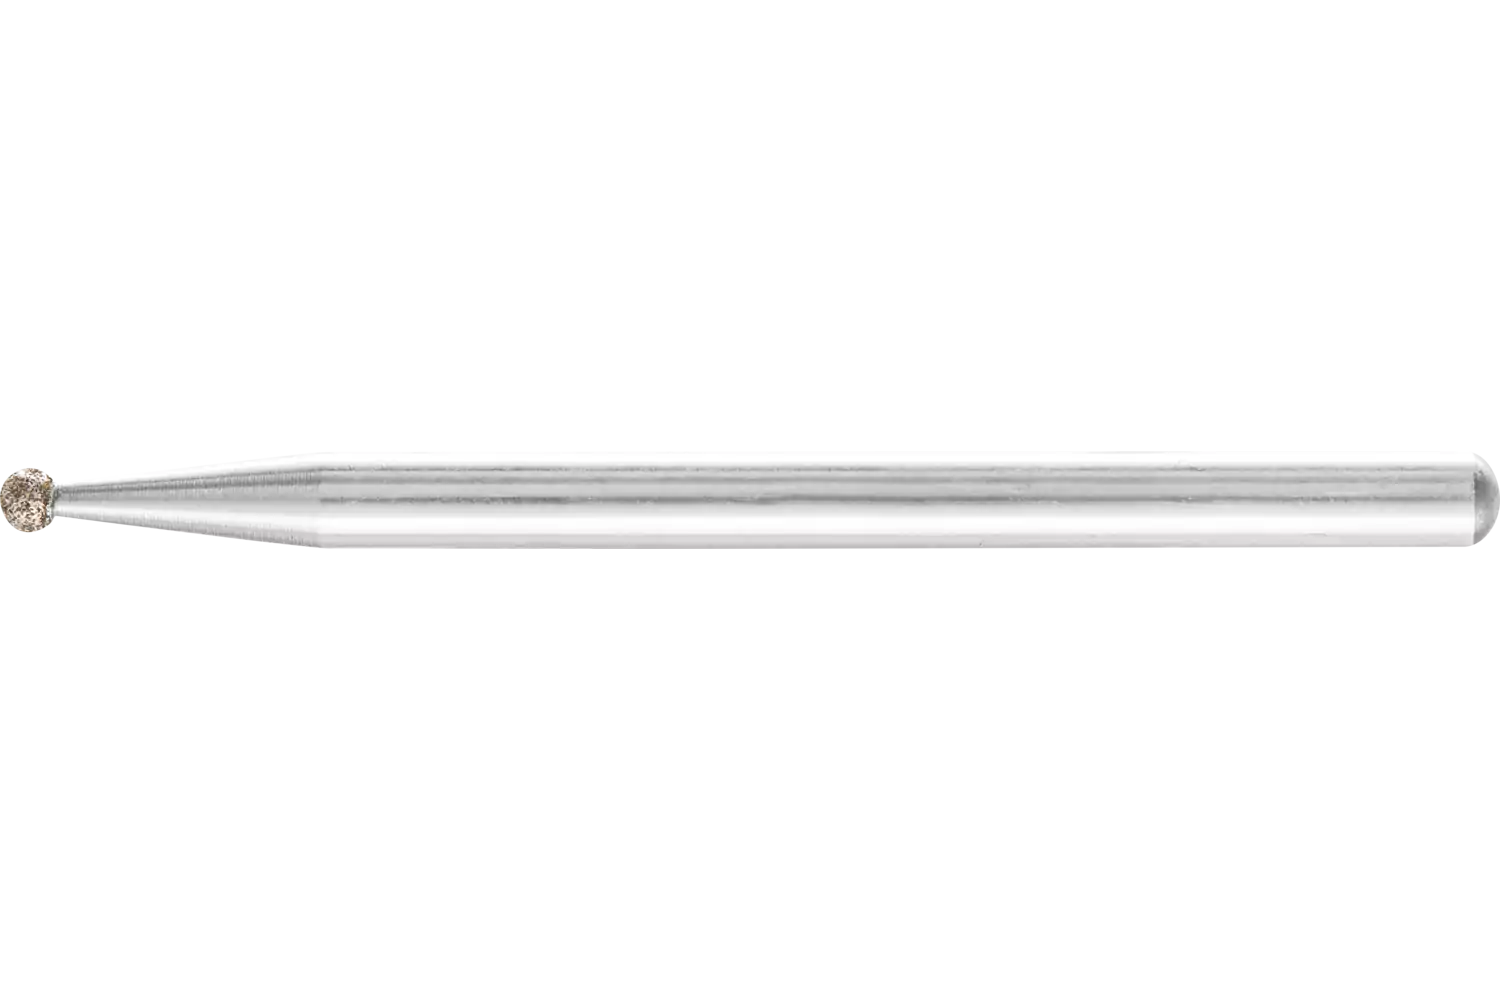 Mola abrasiva in CBN sfera Ø 2,0 mm gambo Ø 3 mm B126 (media) per incisione e sbavatura 1